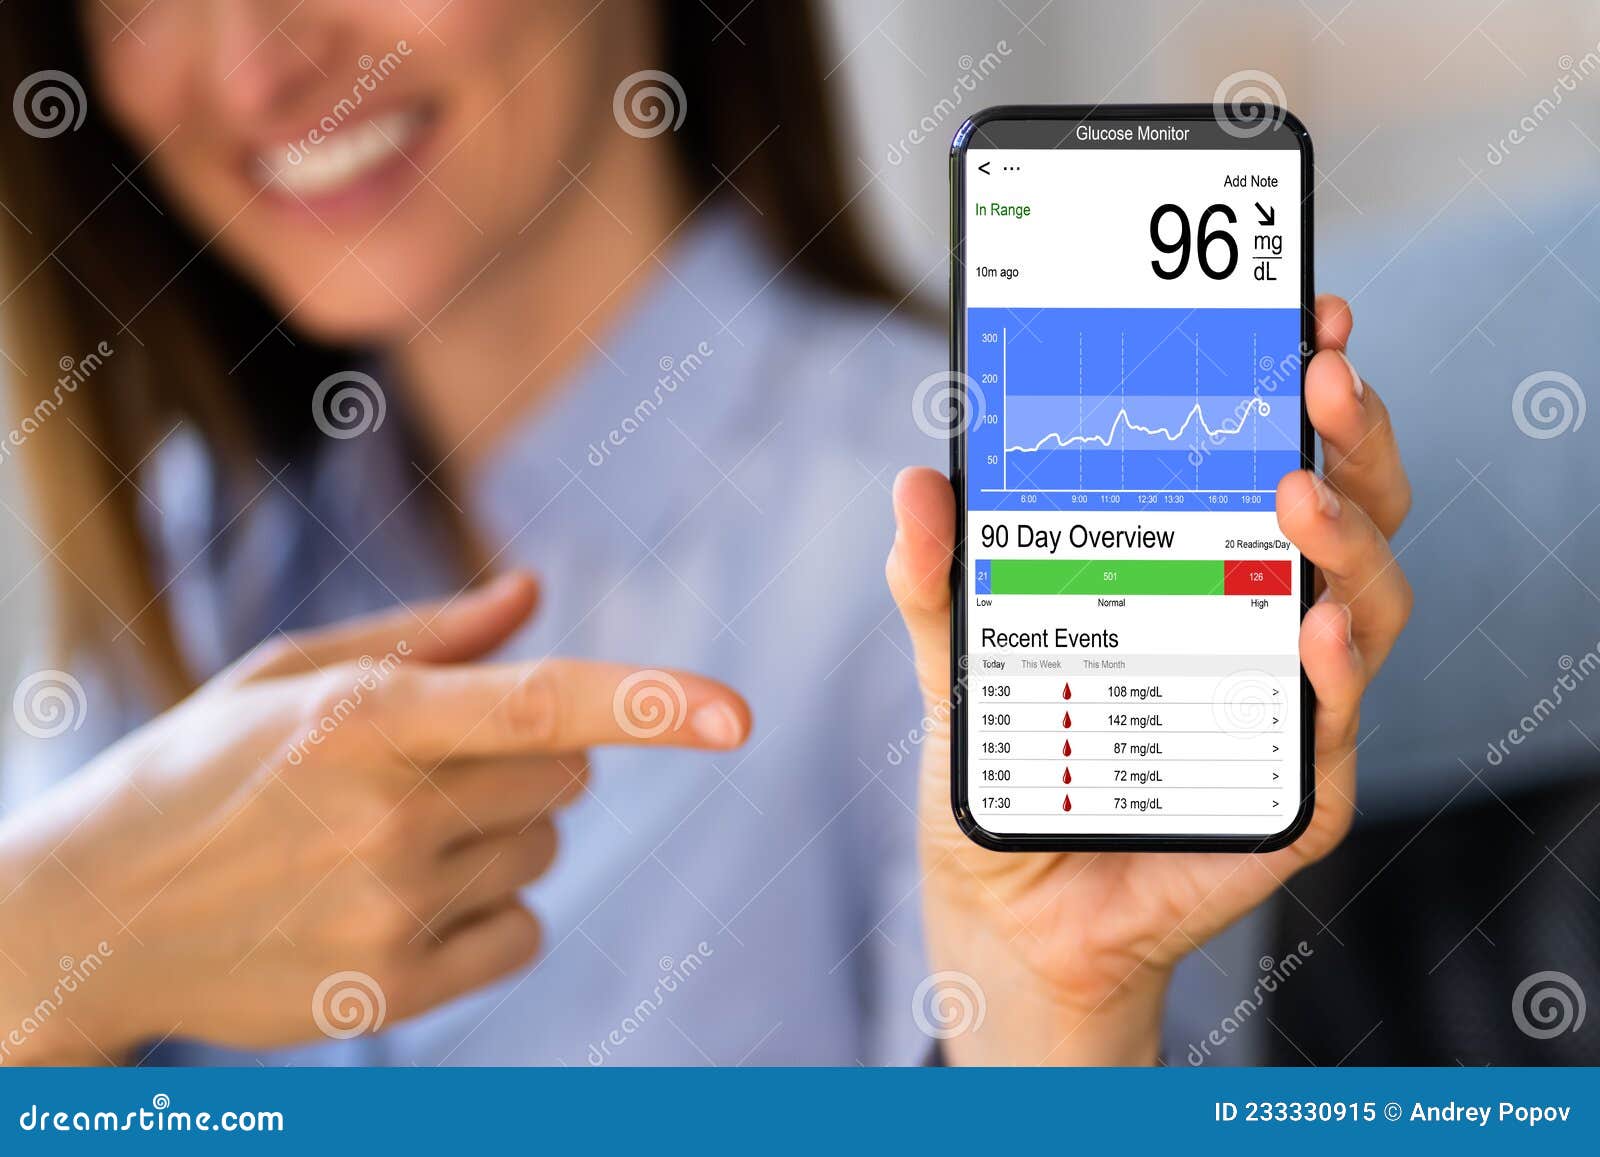 continuous diabetes glucose monitoring app